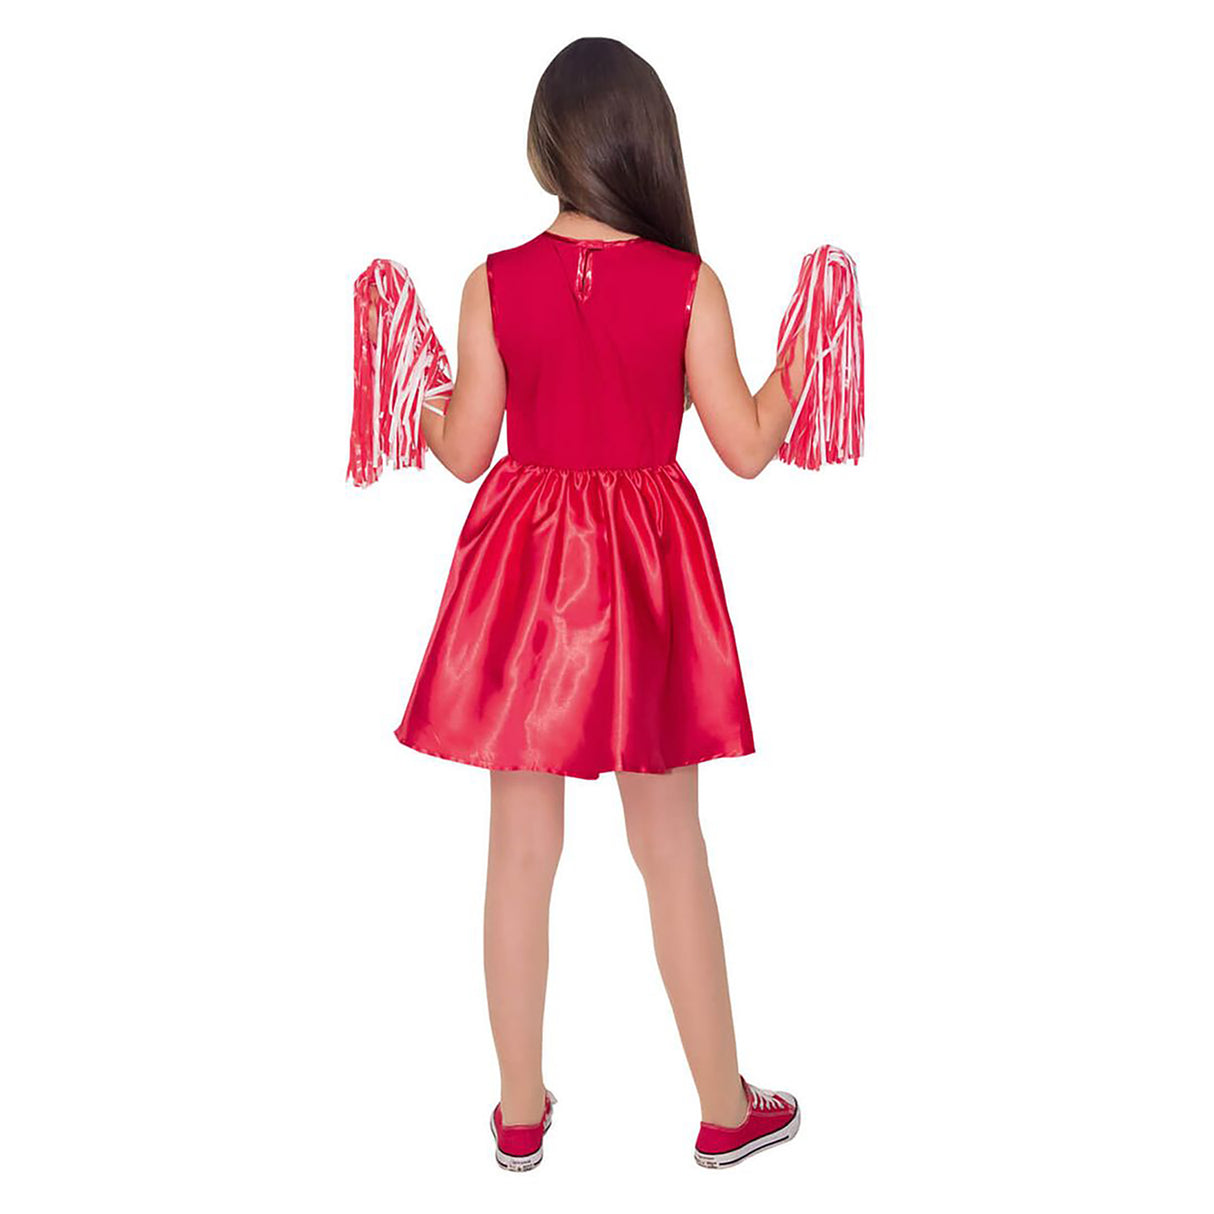 Rubies High School Musical Wildcat Cheerleader Costume, Red (9-10 years)